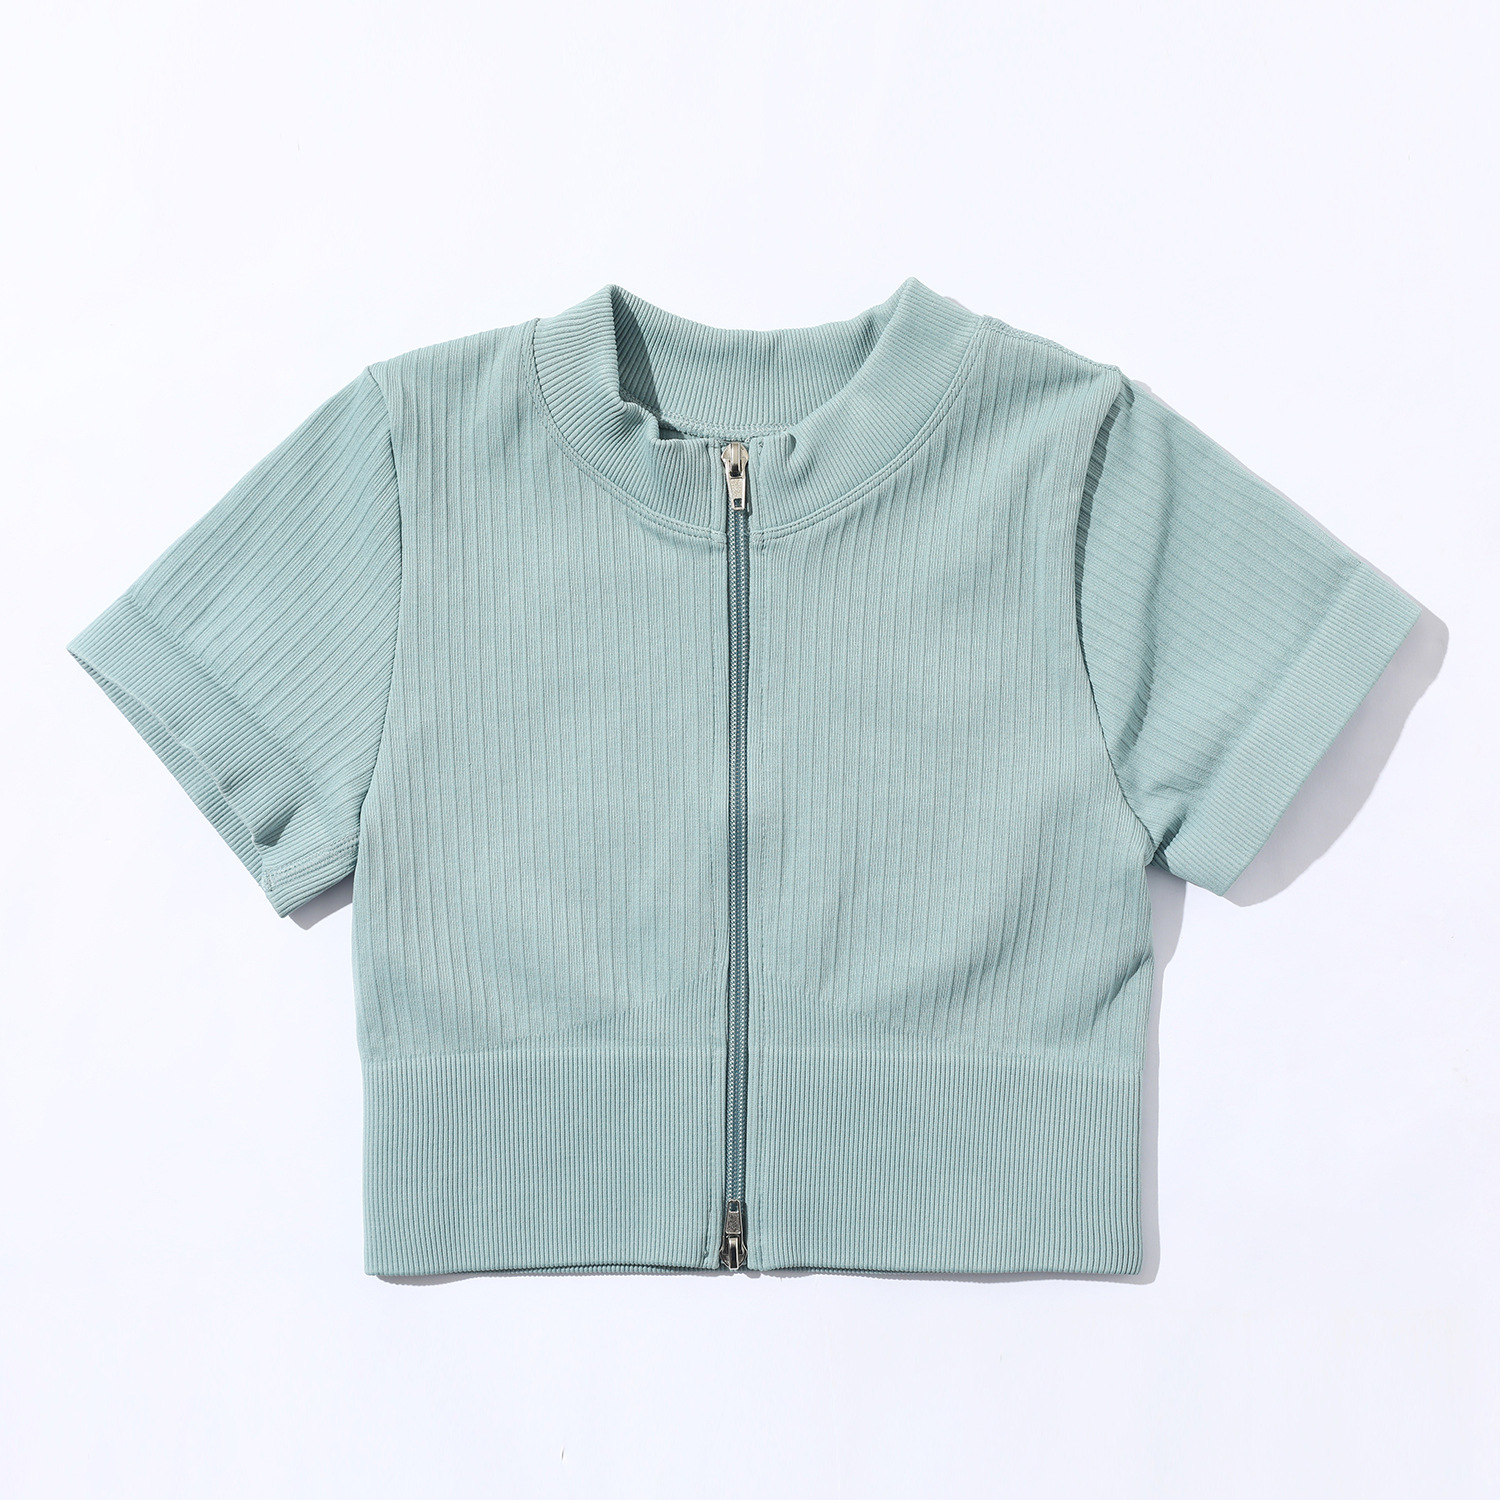 Gray blue zip-up short sleeves